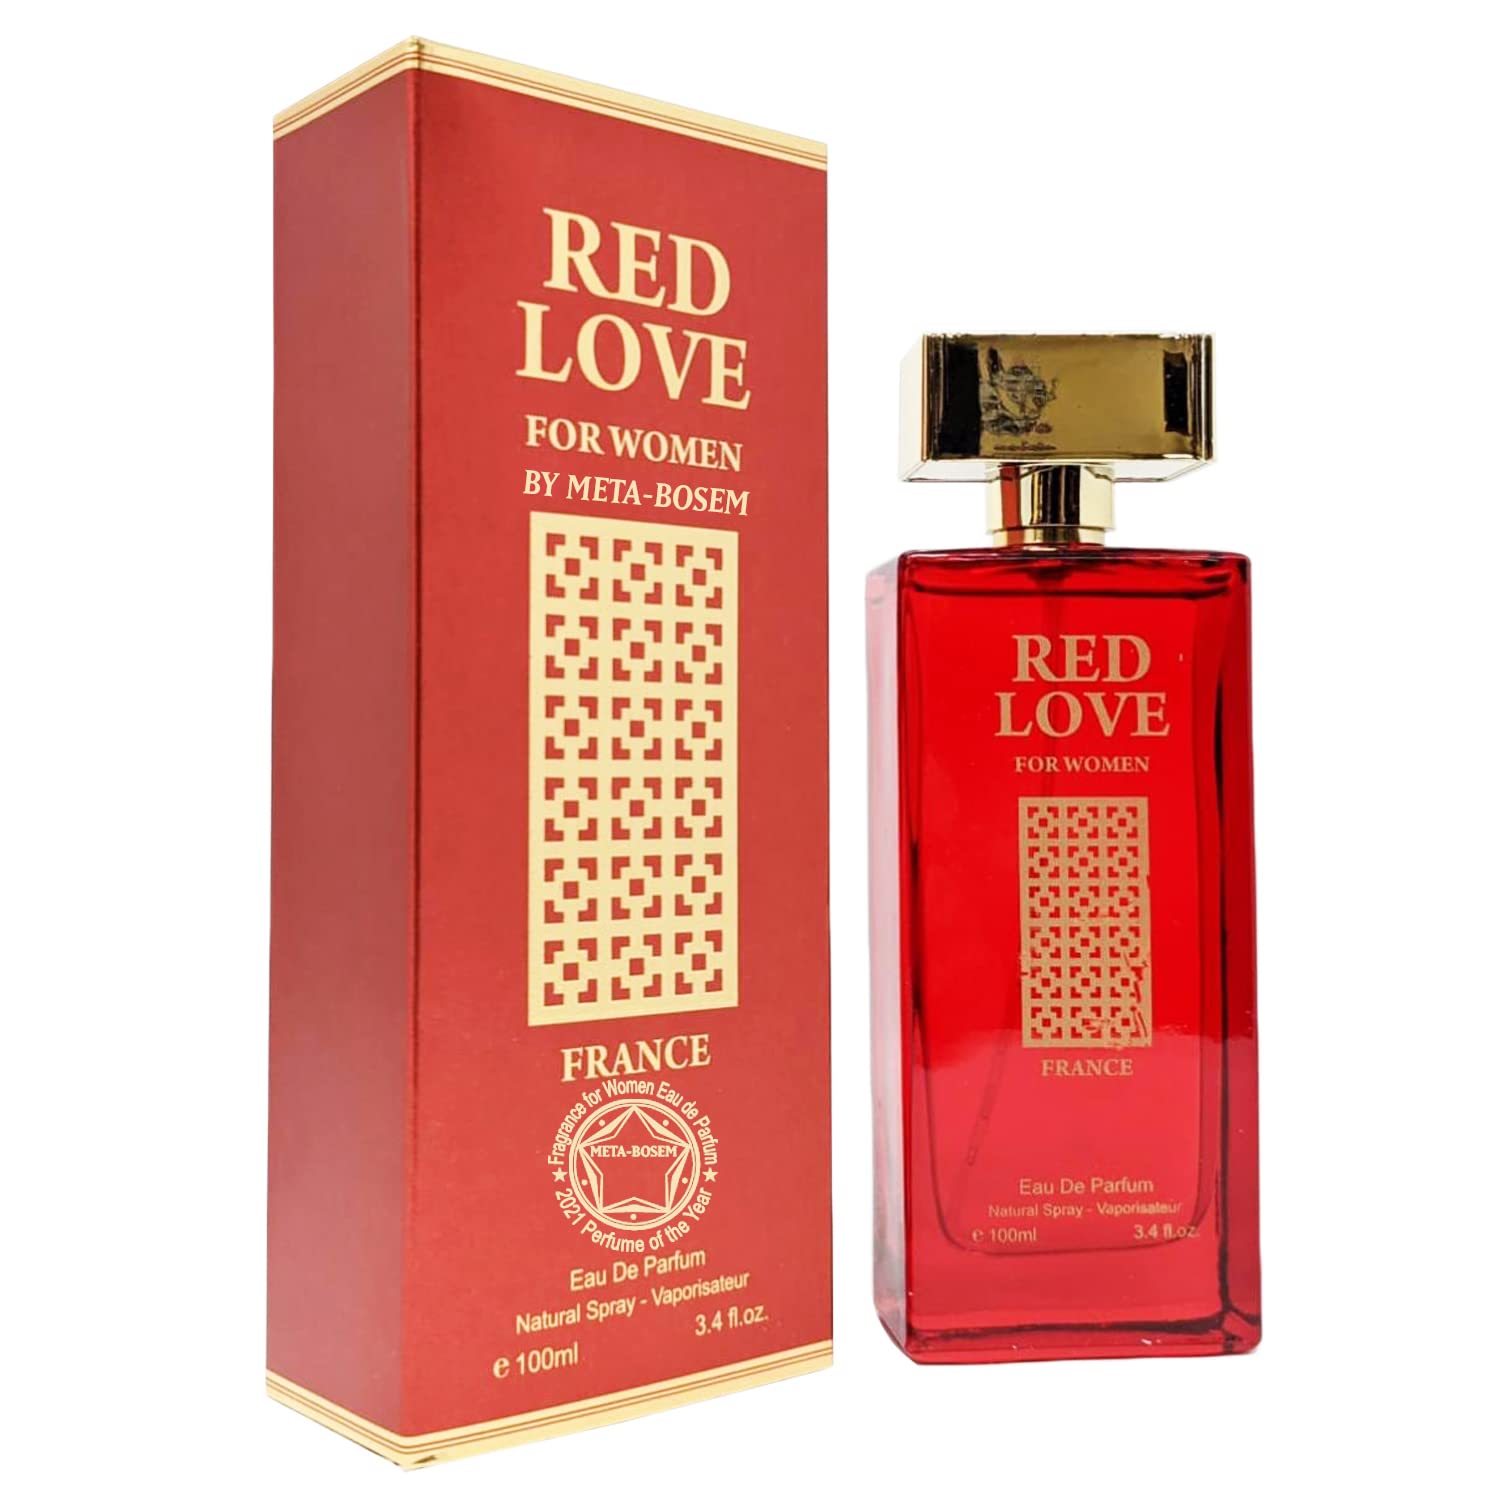 J & H VARIETY PERFUME RED LOVE for Women, Eau de Parfum Natural Spray | Floral and Jasmine Notes Feminine Fresh Fragrance, all Skin Types Casual Formal Wear, 3.4 Fluid Ounce/100 Ml